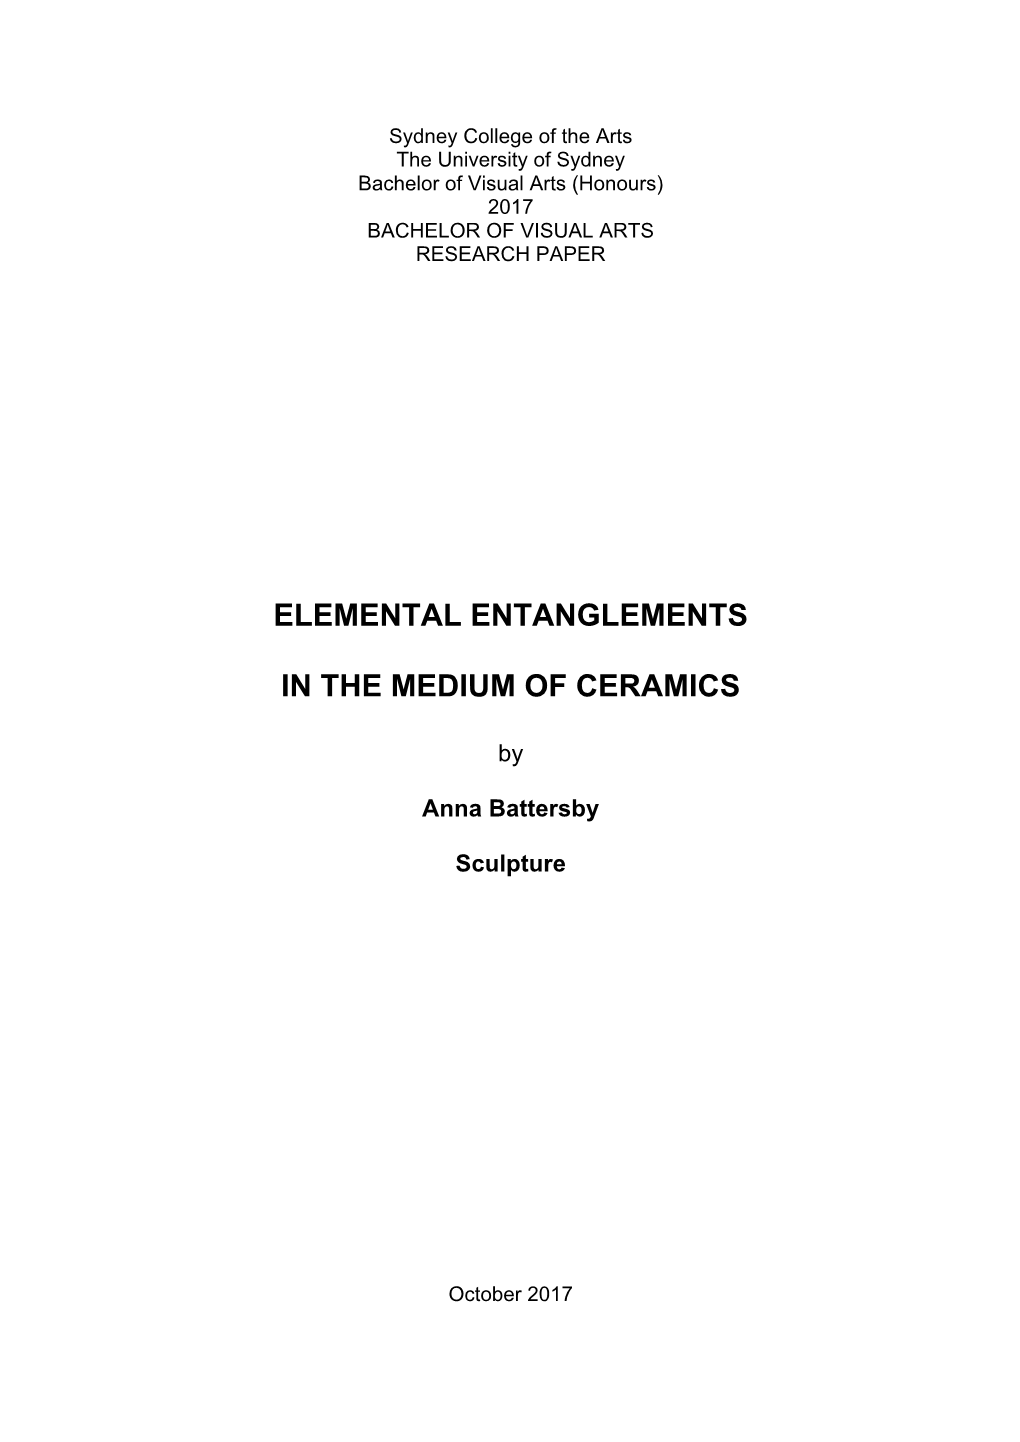 Elemental Entanglements in the Medium of Ceramics